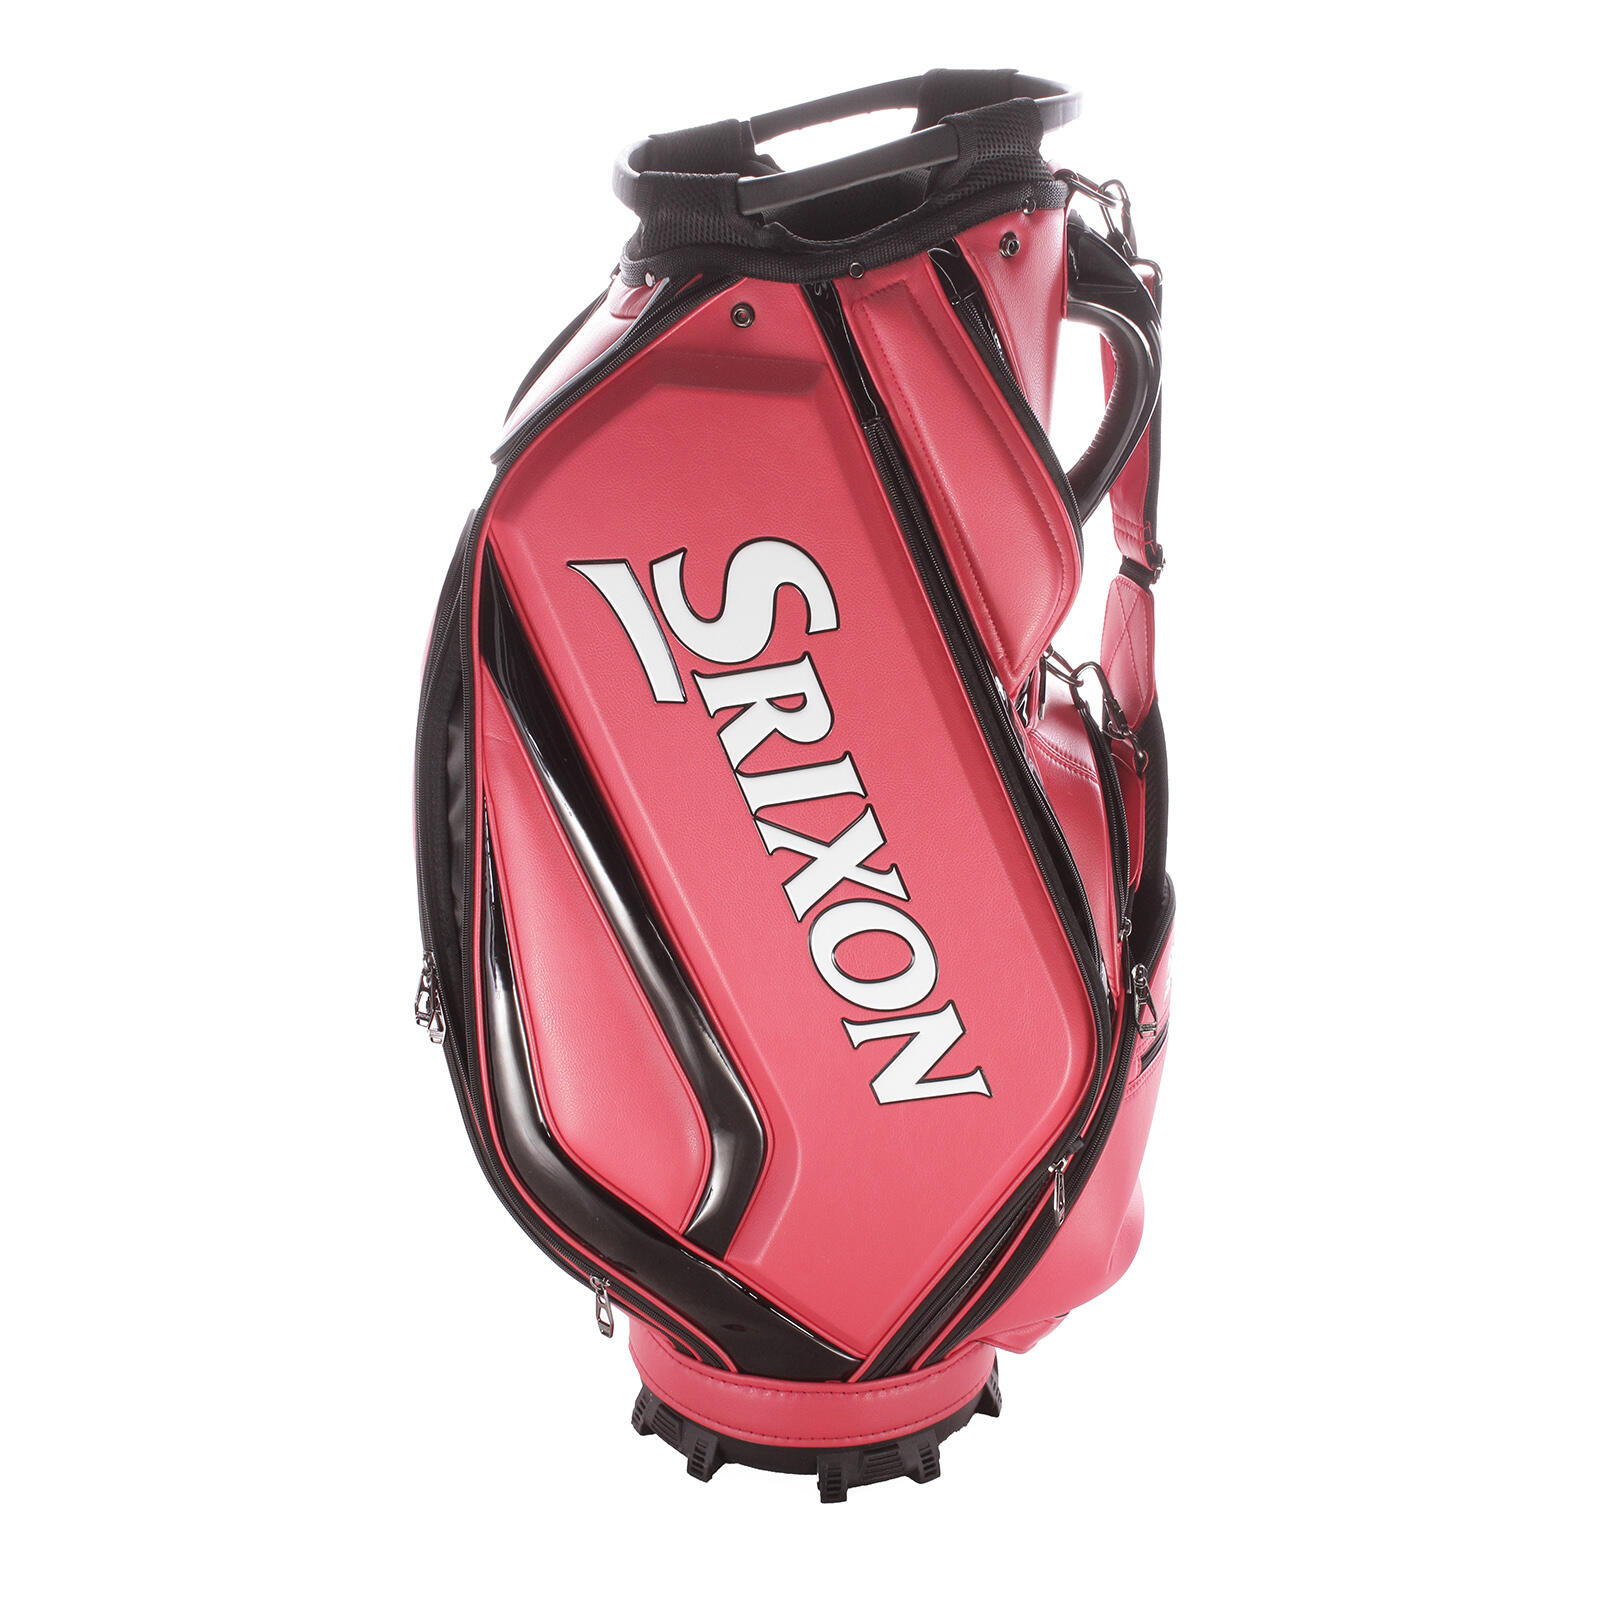 USED - Srixon Tour Bag with 4 Way Divider 10 Pockets & Single Strap - GRADE B 1/5